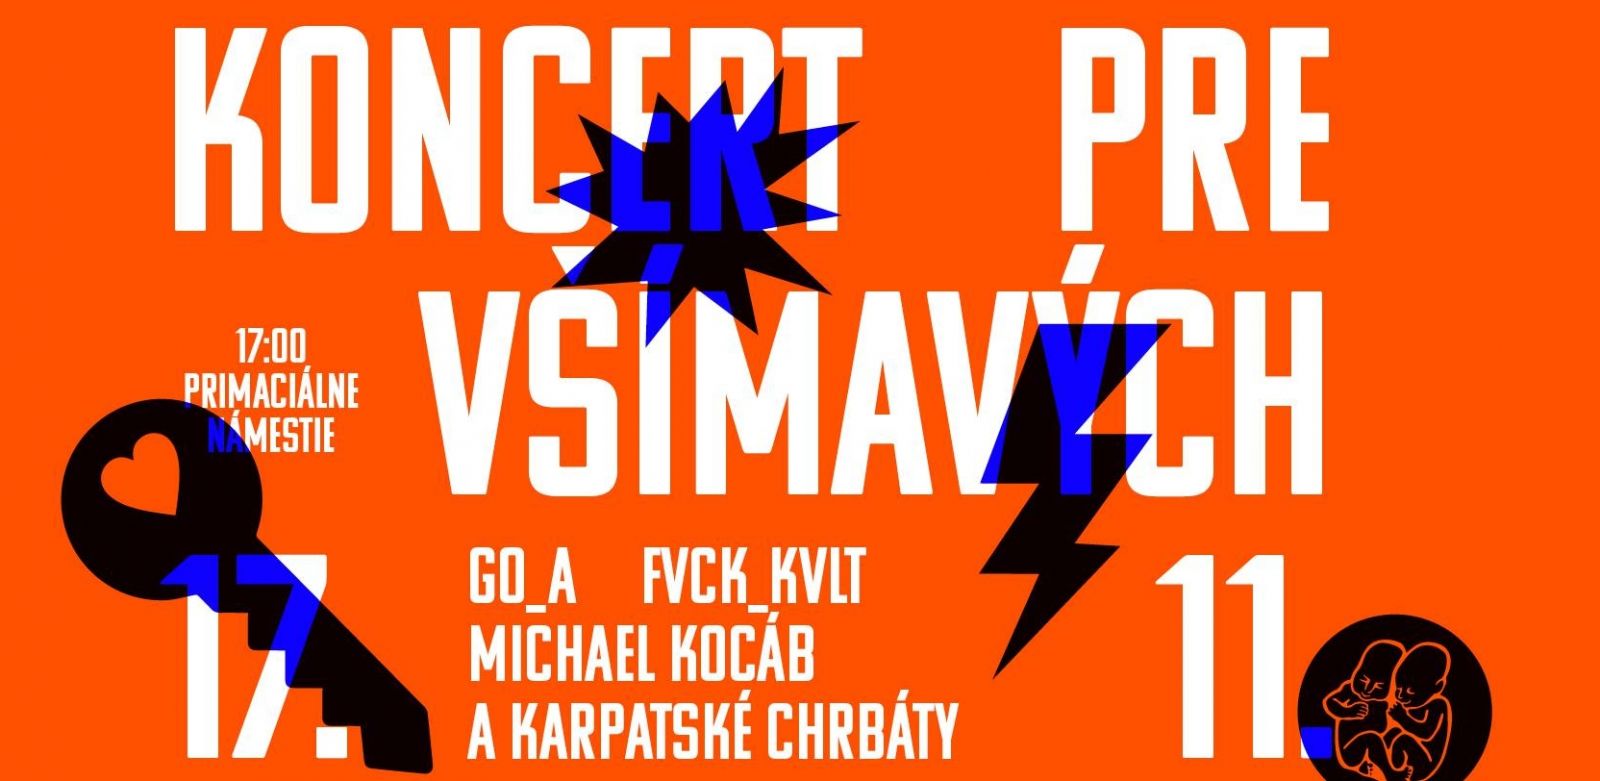 Na Koncerte pre všímavých 17. novembra vystúpia Michael Kocáb s kapelou Karpatské chrbáty, FVCK_KVLT a ukrajinskí Go_A.